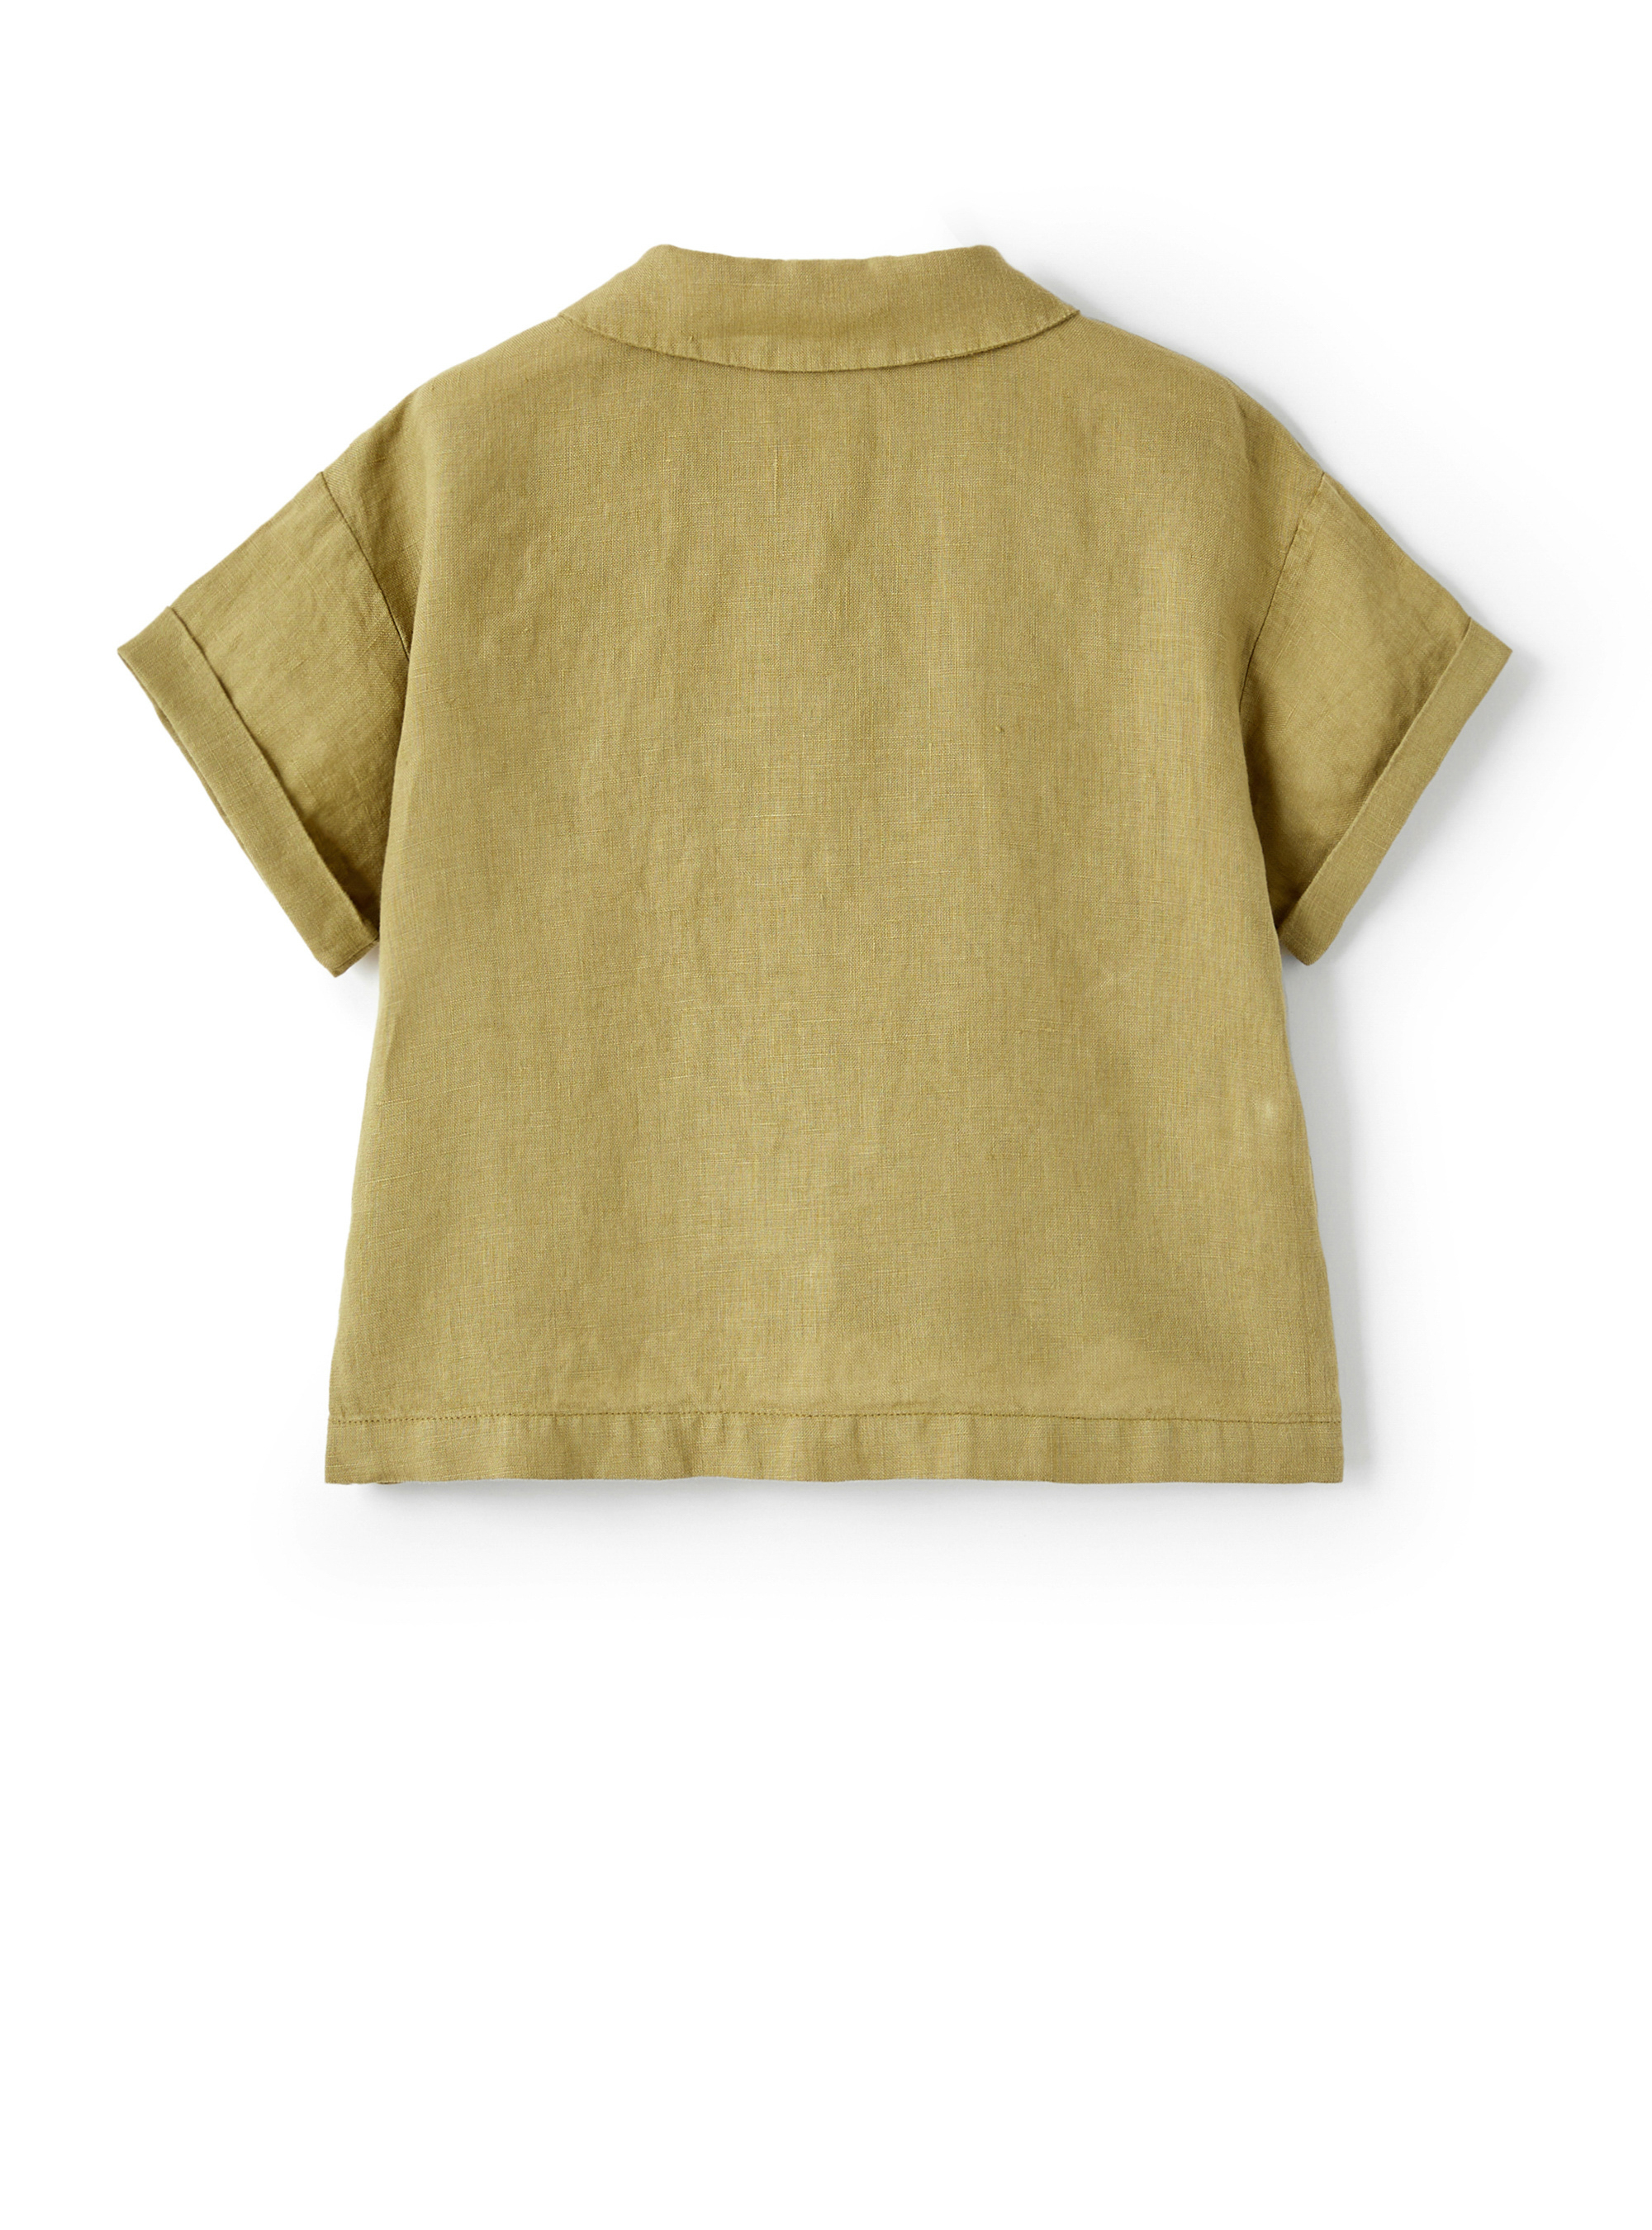 Khaki linen shirt with breast pocket - Green | Il Gufo